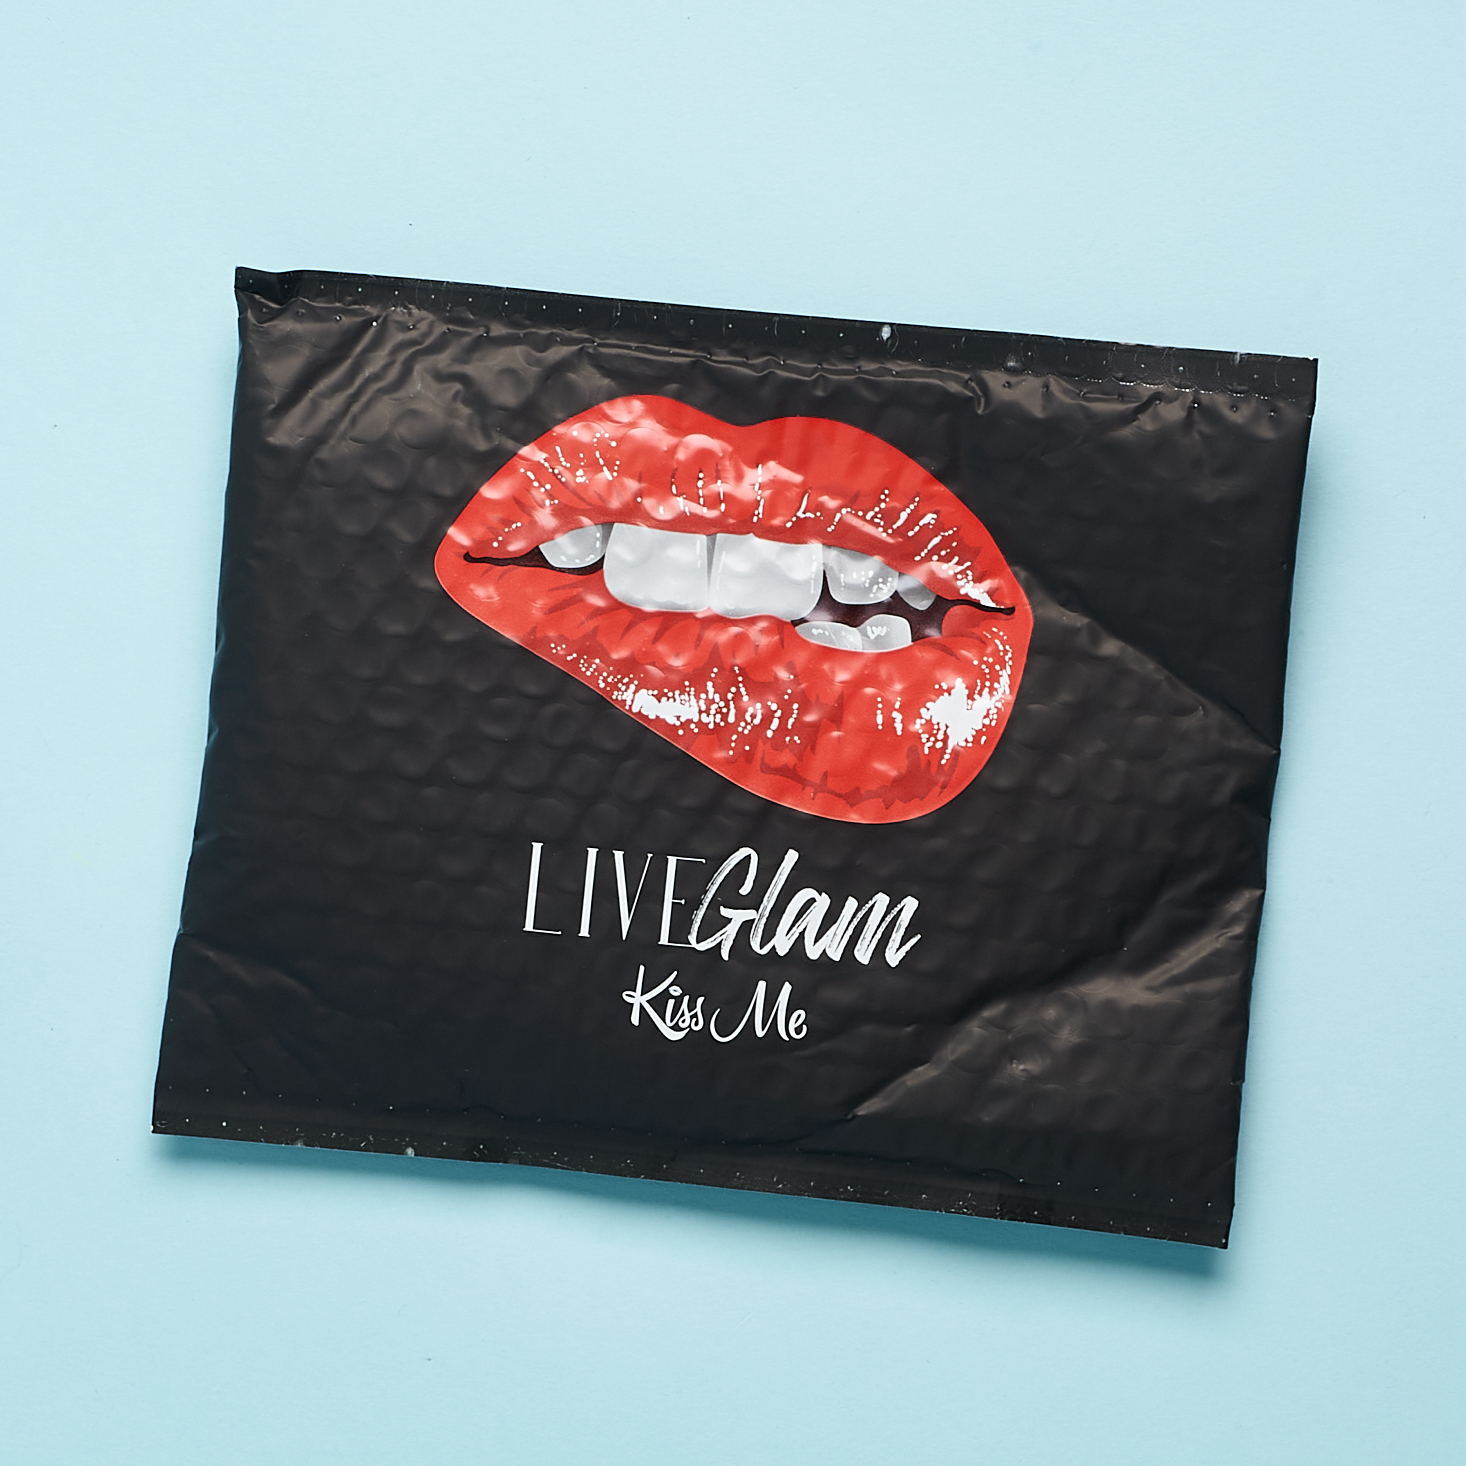 LiveGlam Lippie Club Lipstick Review + Coupon – August 2020